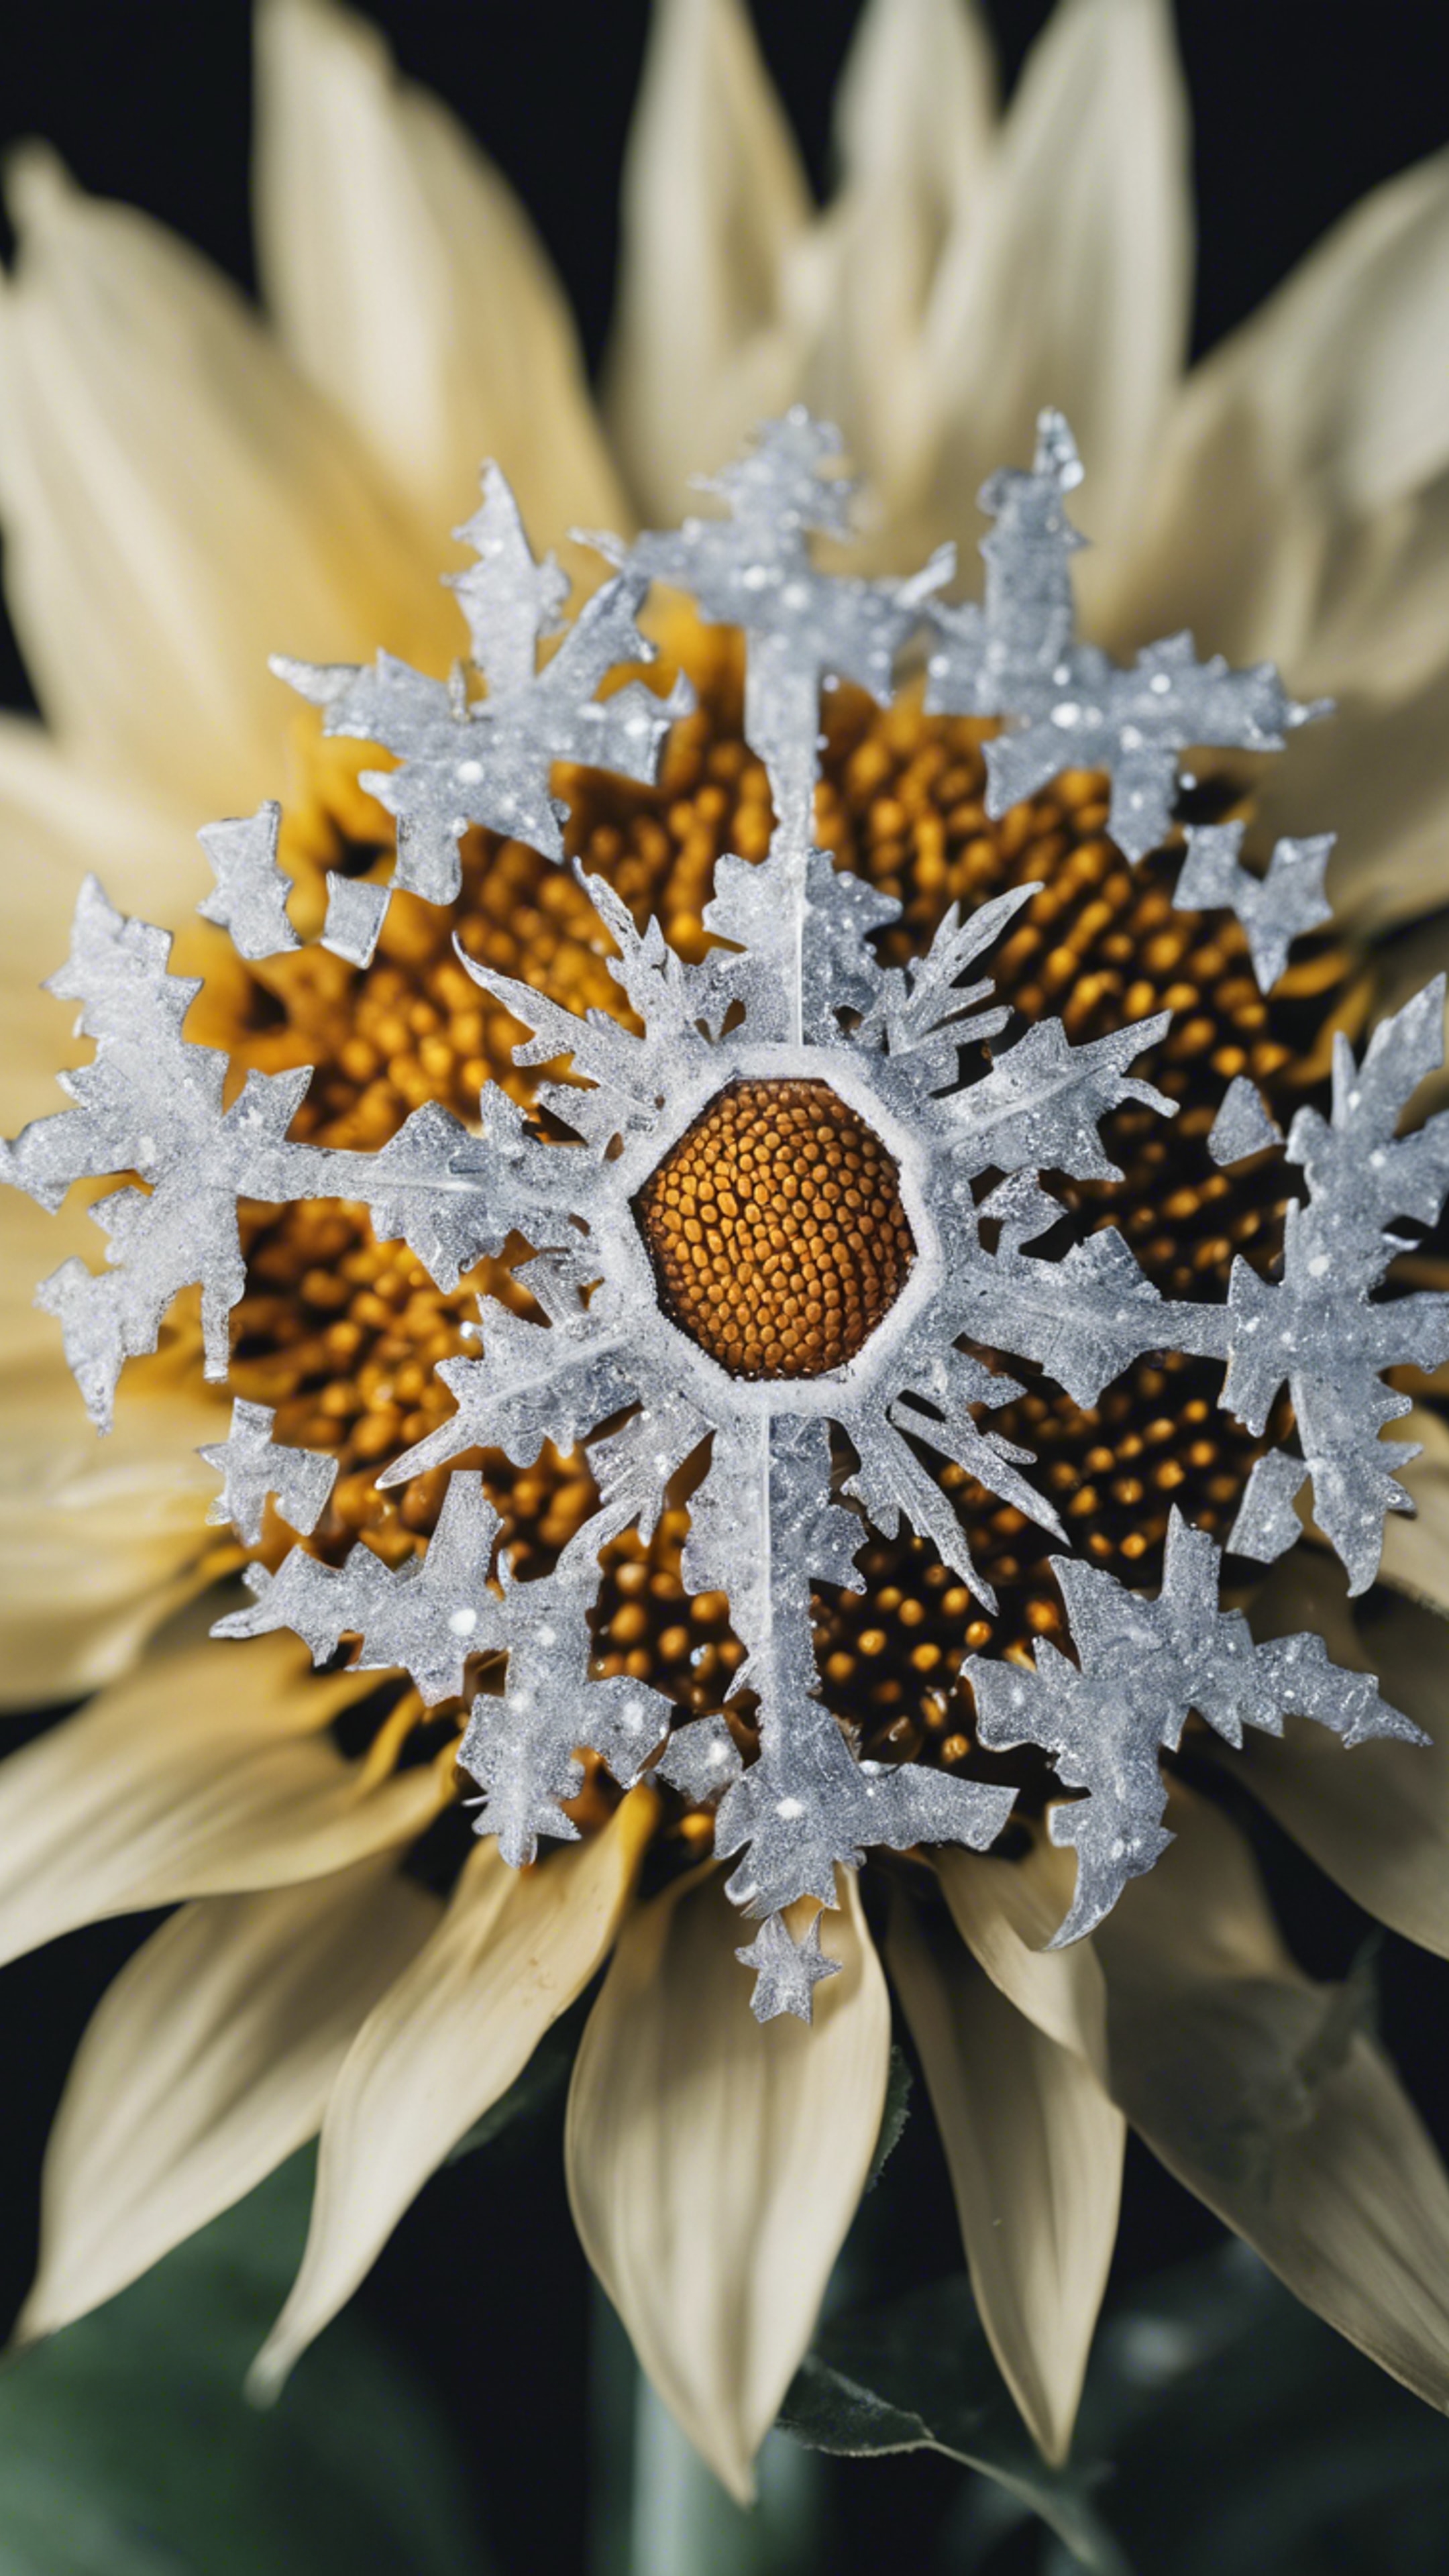 A beautiful snowflake on a sunflower.壁紙[bec770c36b254d6c9b40]